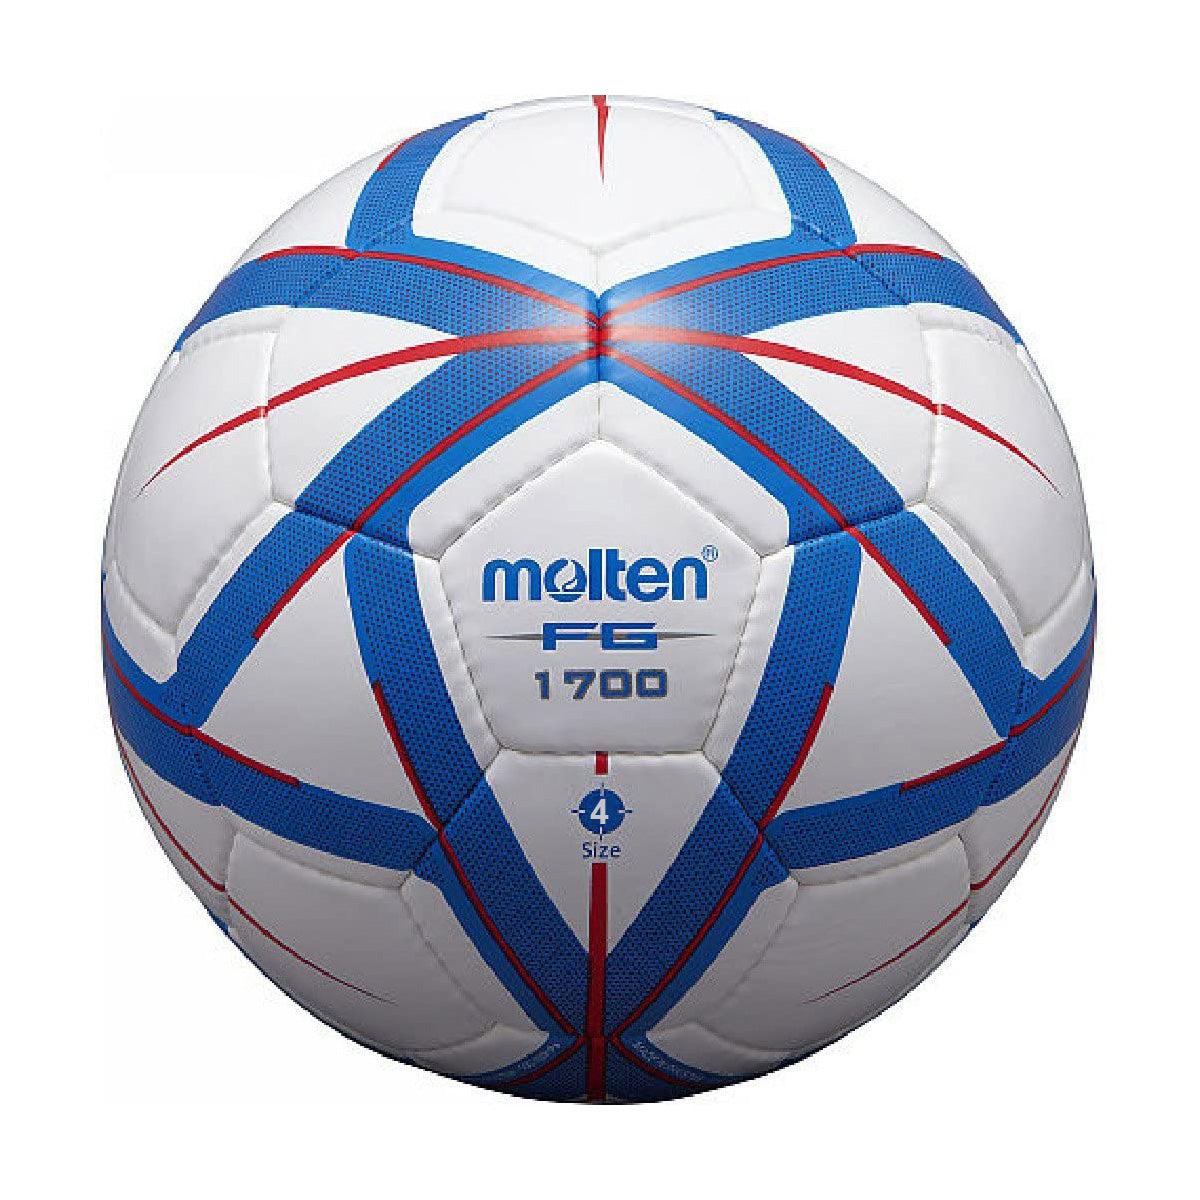 Molten F4G1700BR Football-Football-Pro Sports